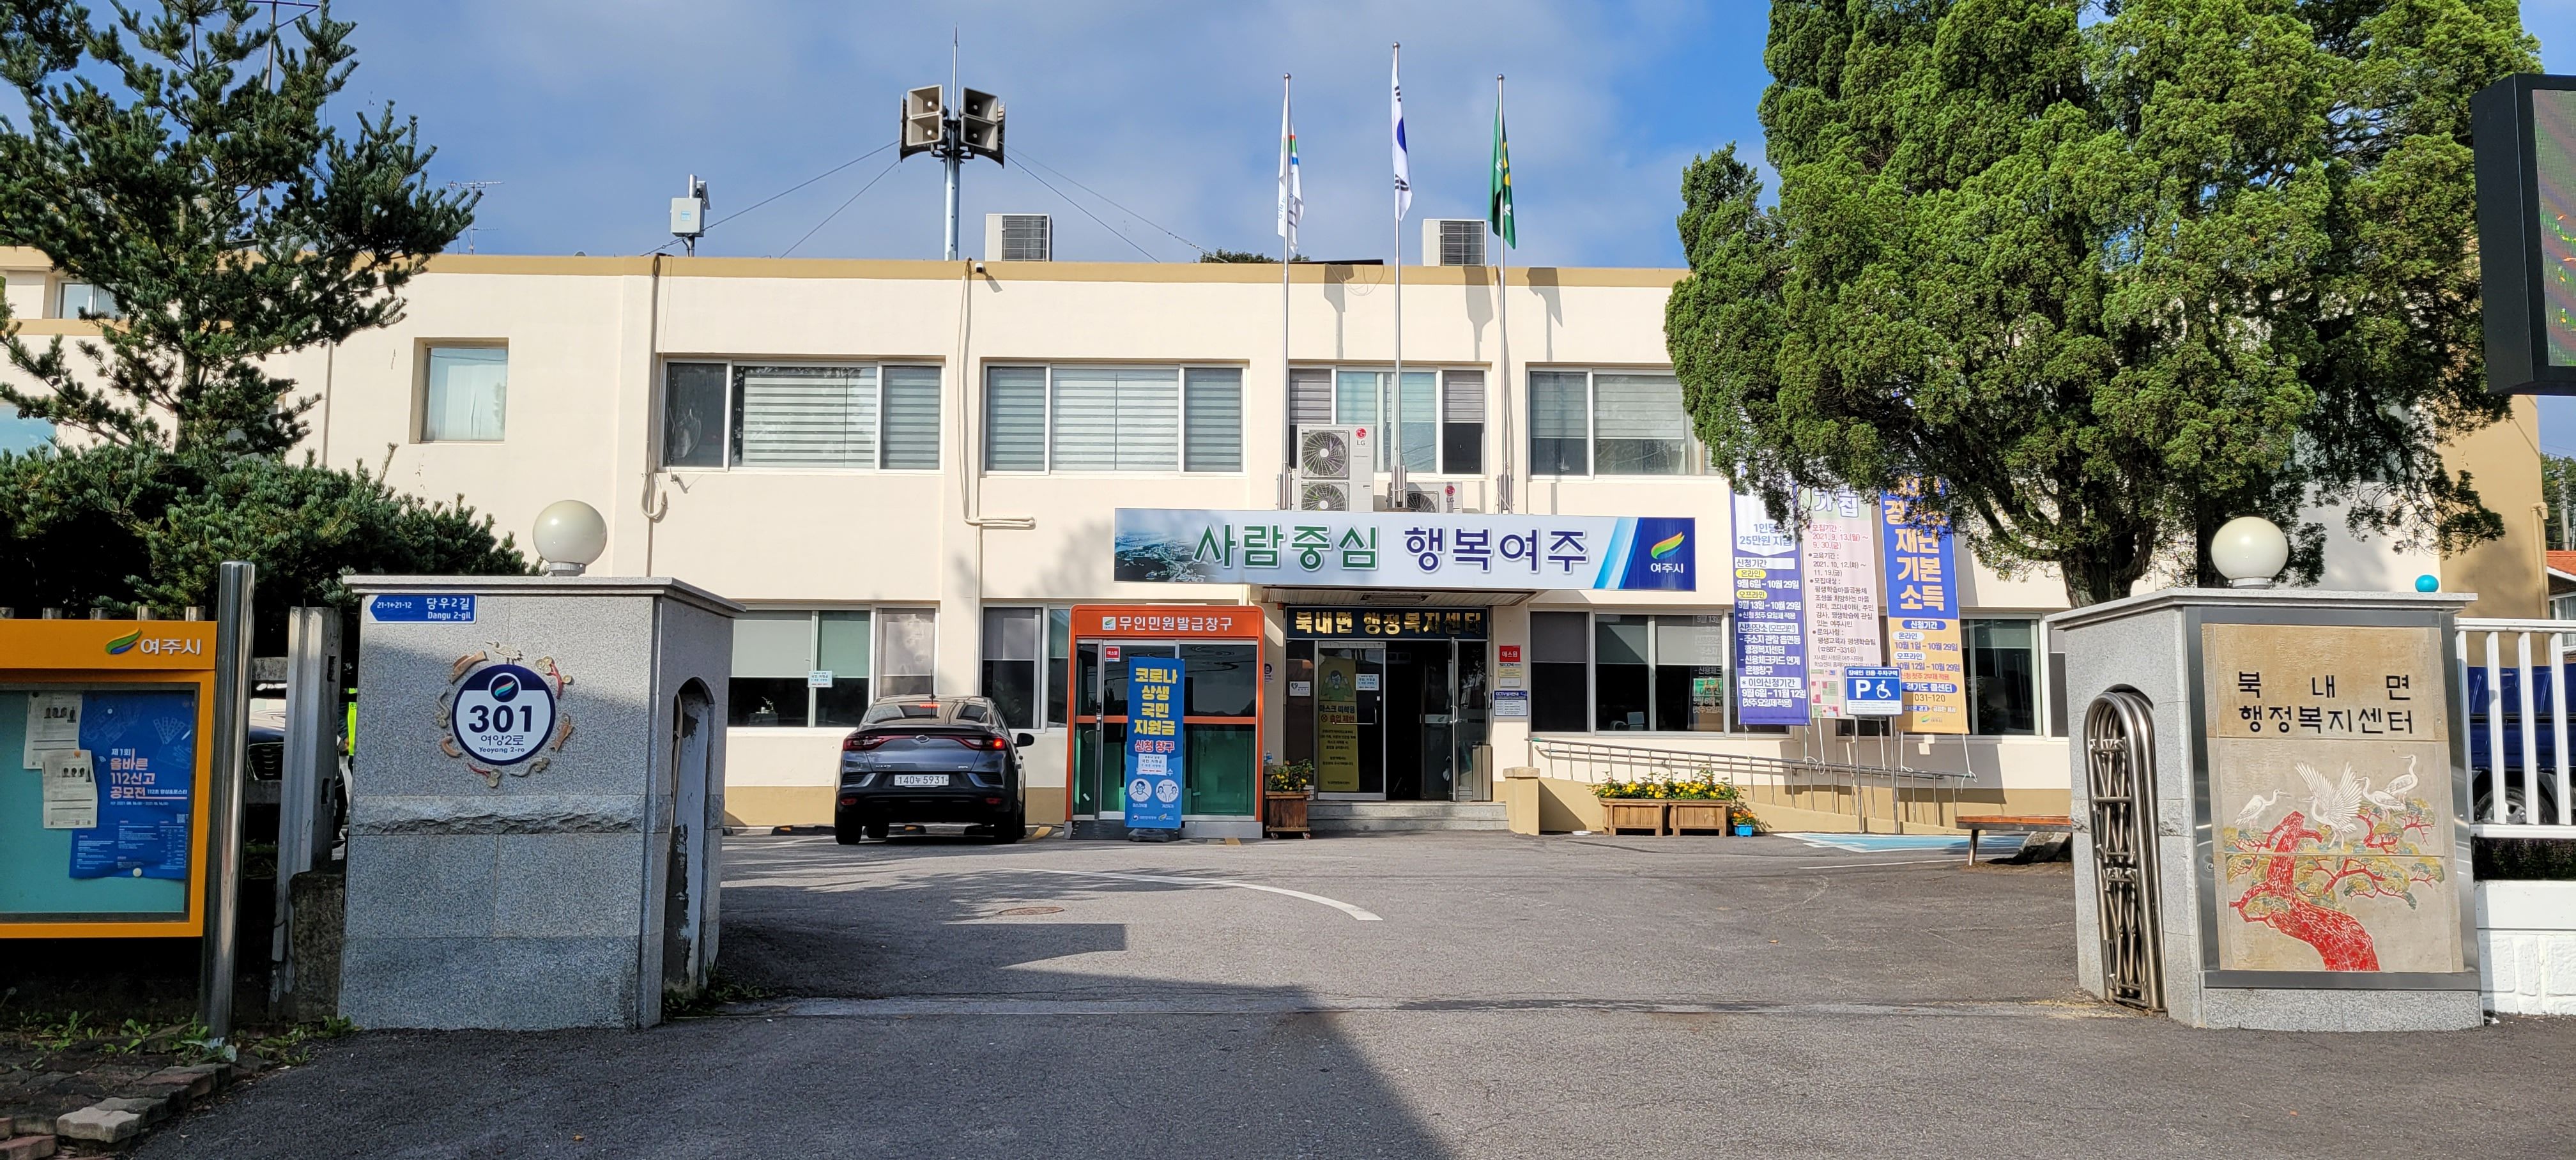 Bungnae-Myeon Administrative welfare center.jpg